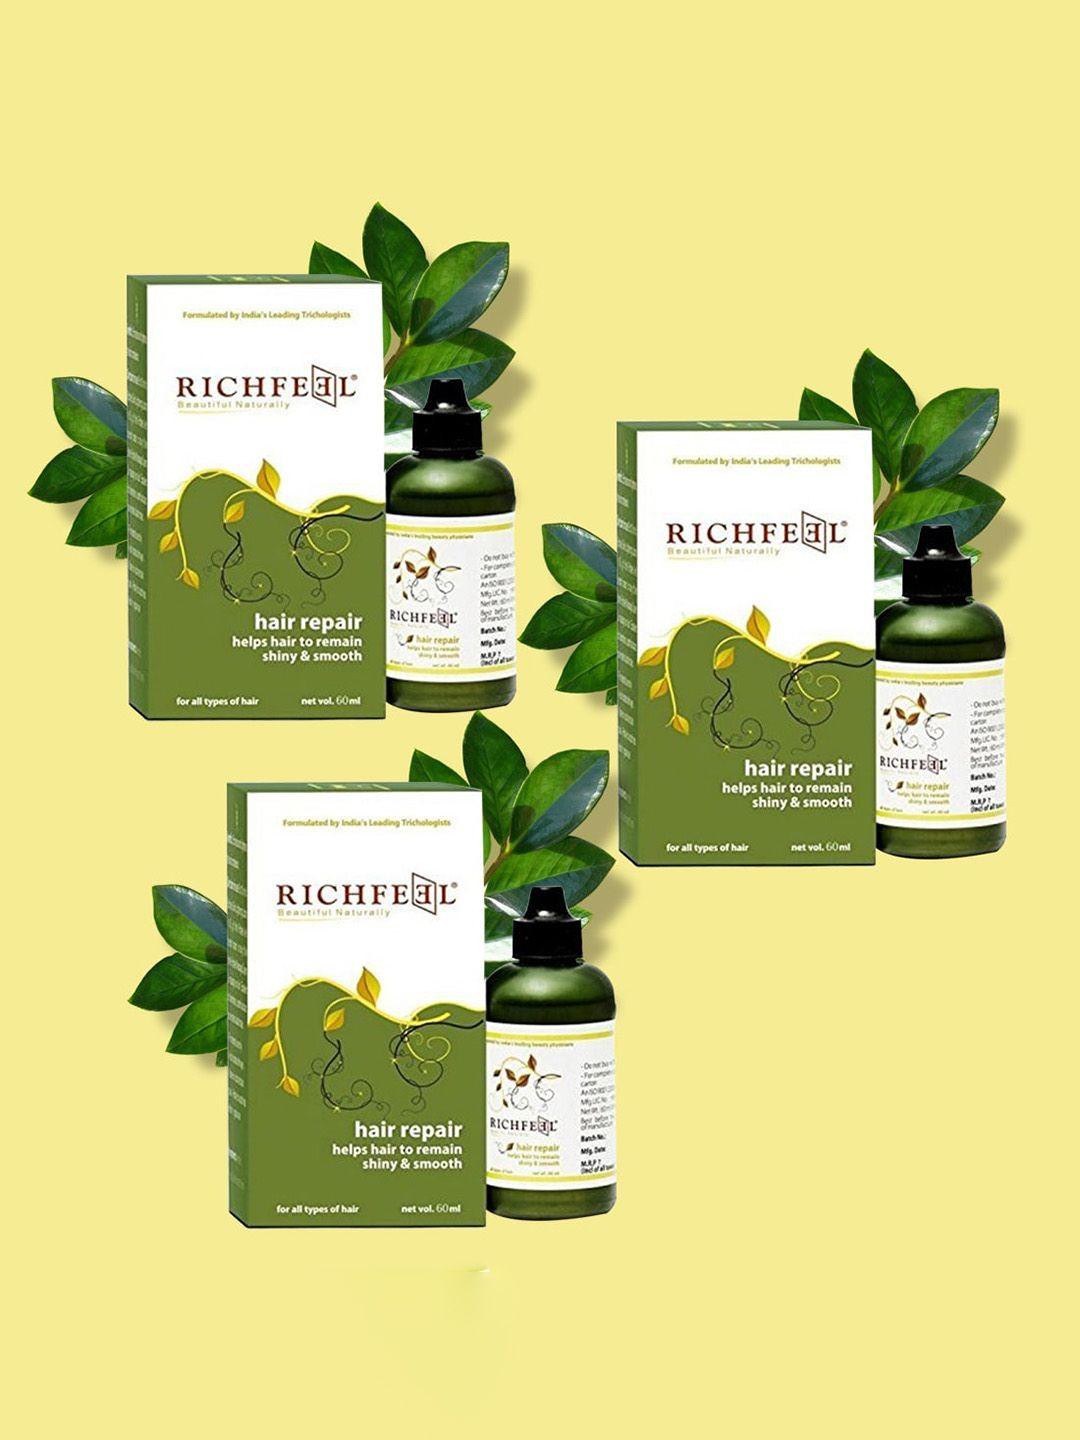 richfeel set of 3 hair repair serum for shiny & smooth hair - 60 ml each